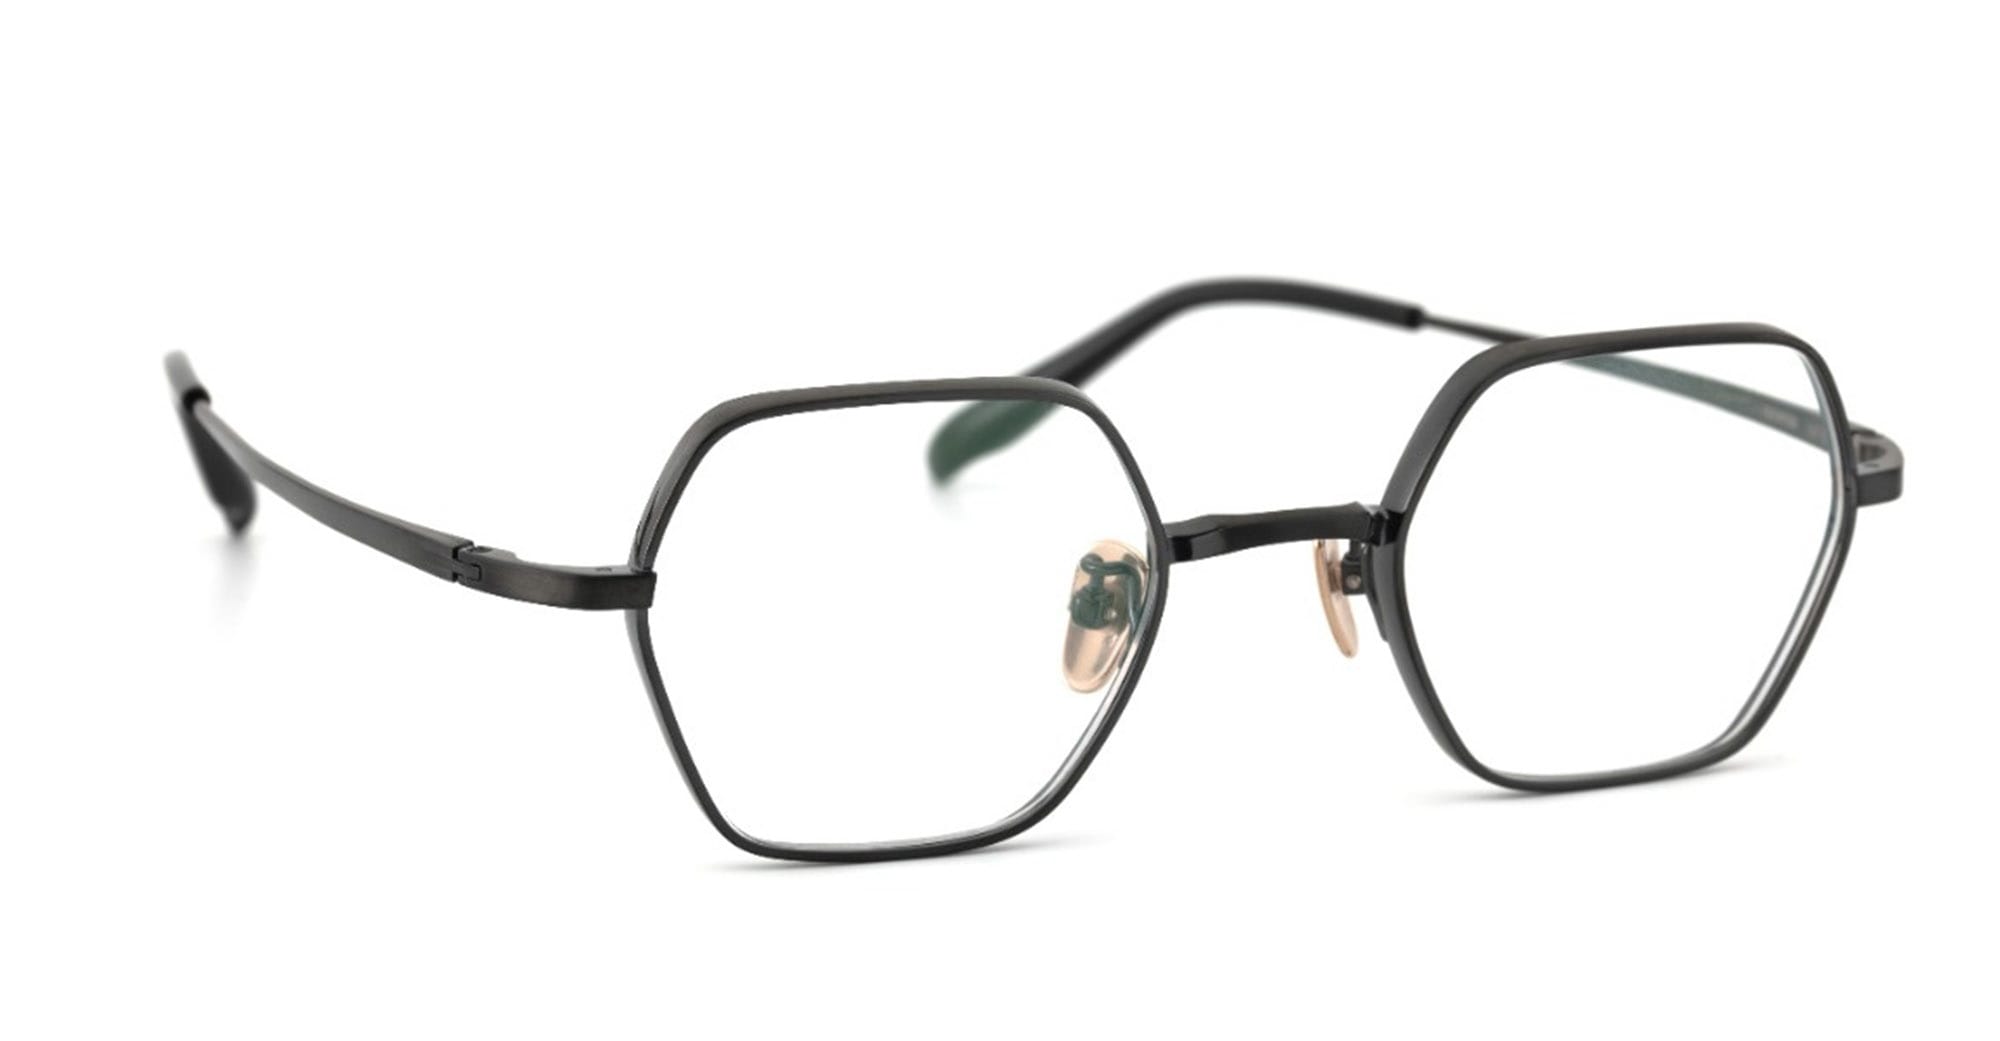 Titanos X Factory900 Mf-005 - Black Rx Glasses | italist, ALWAYS